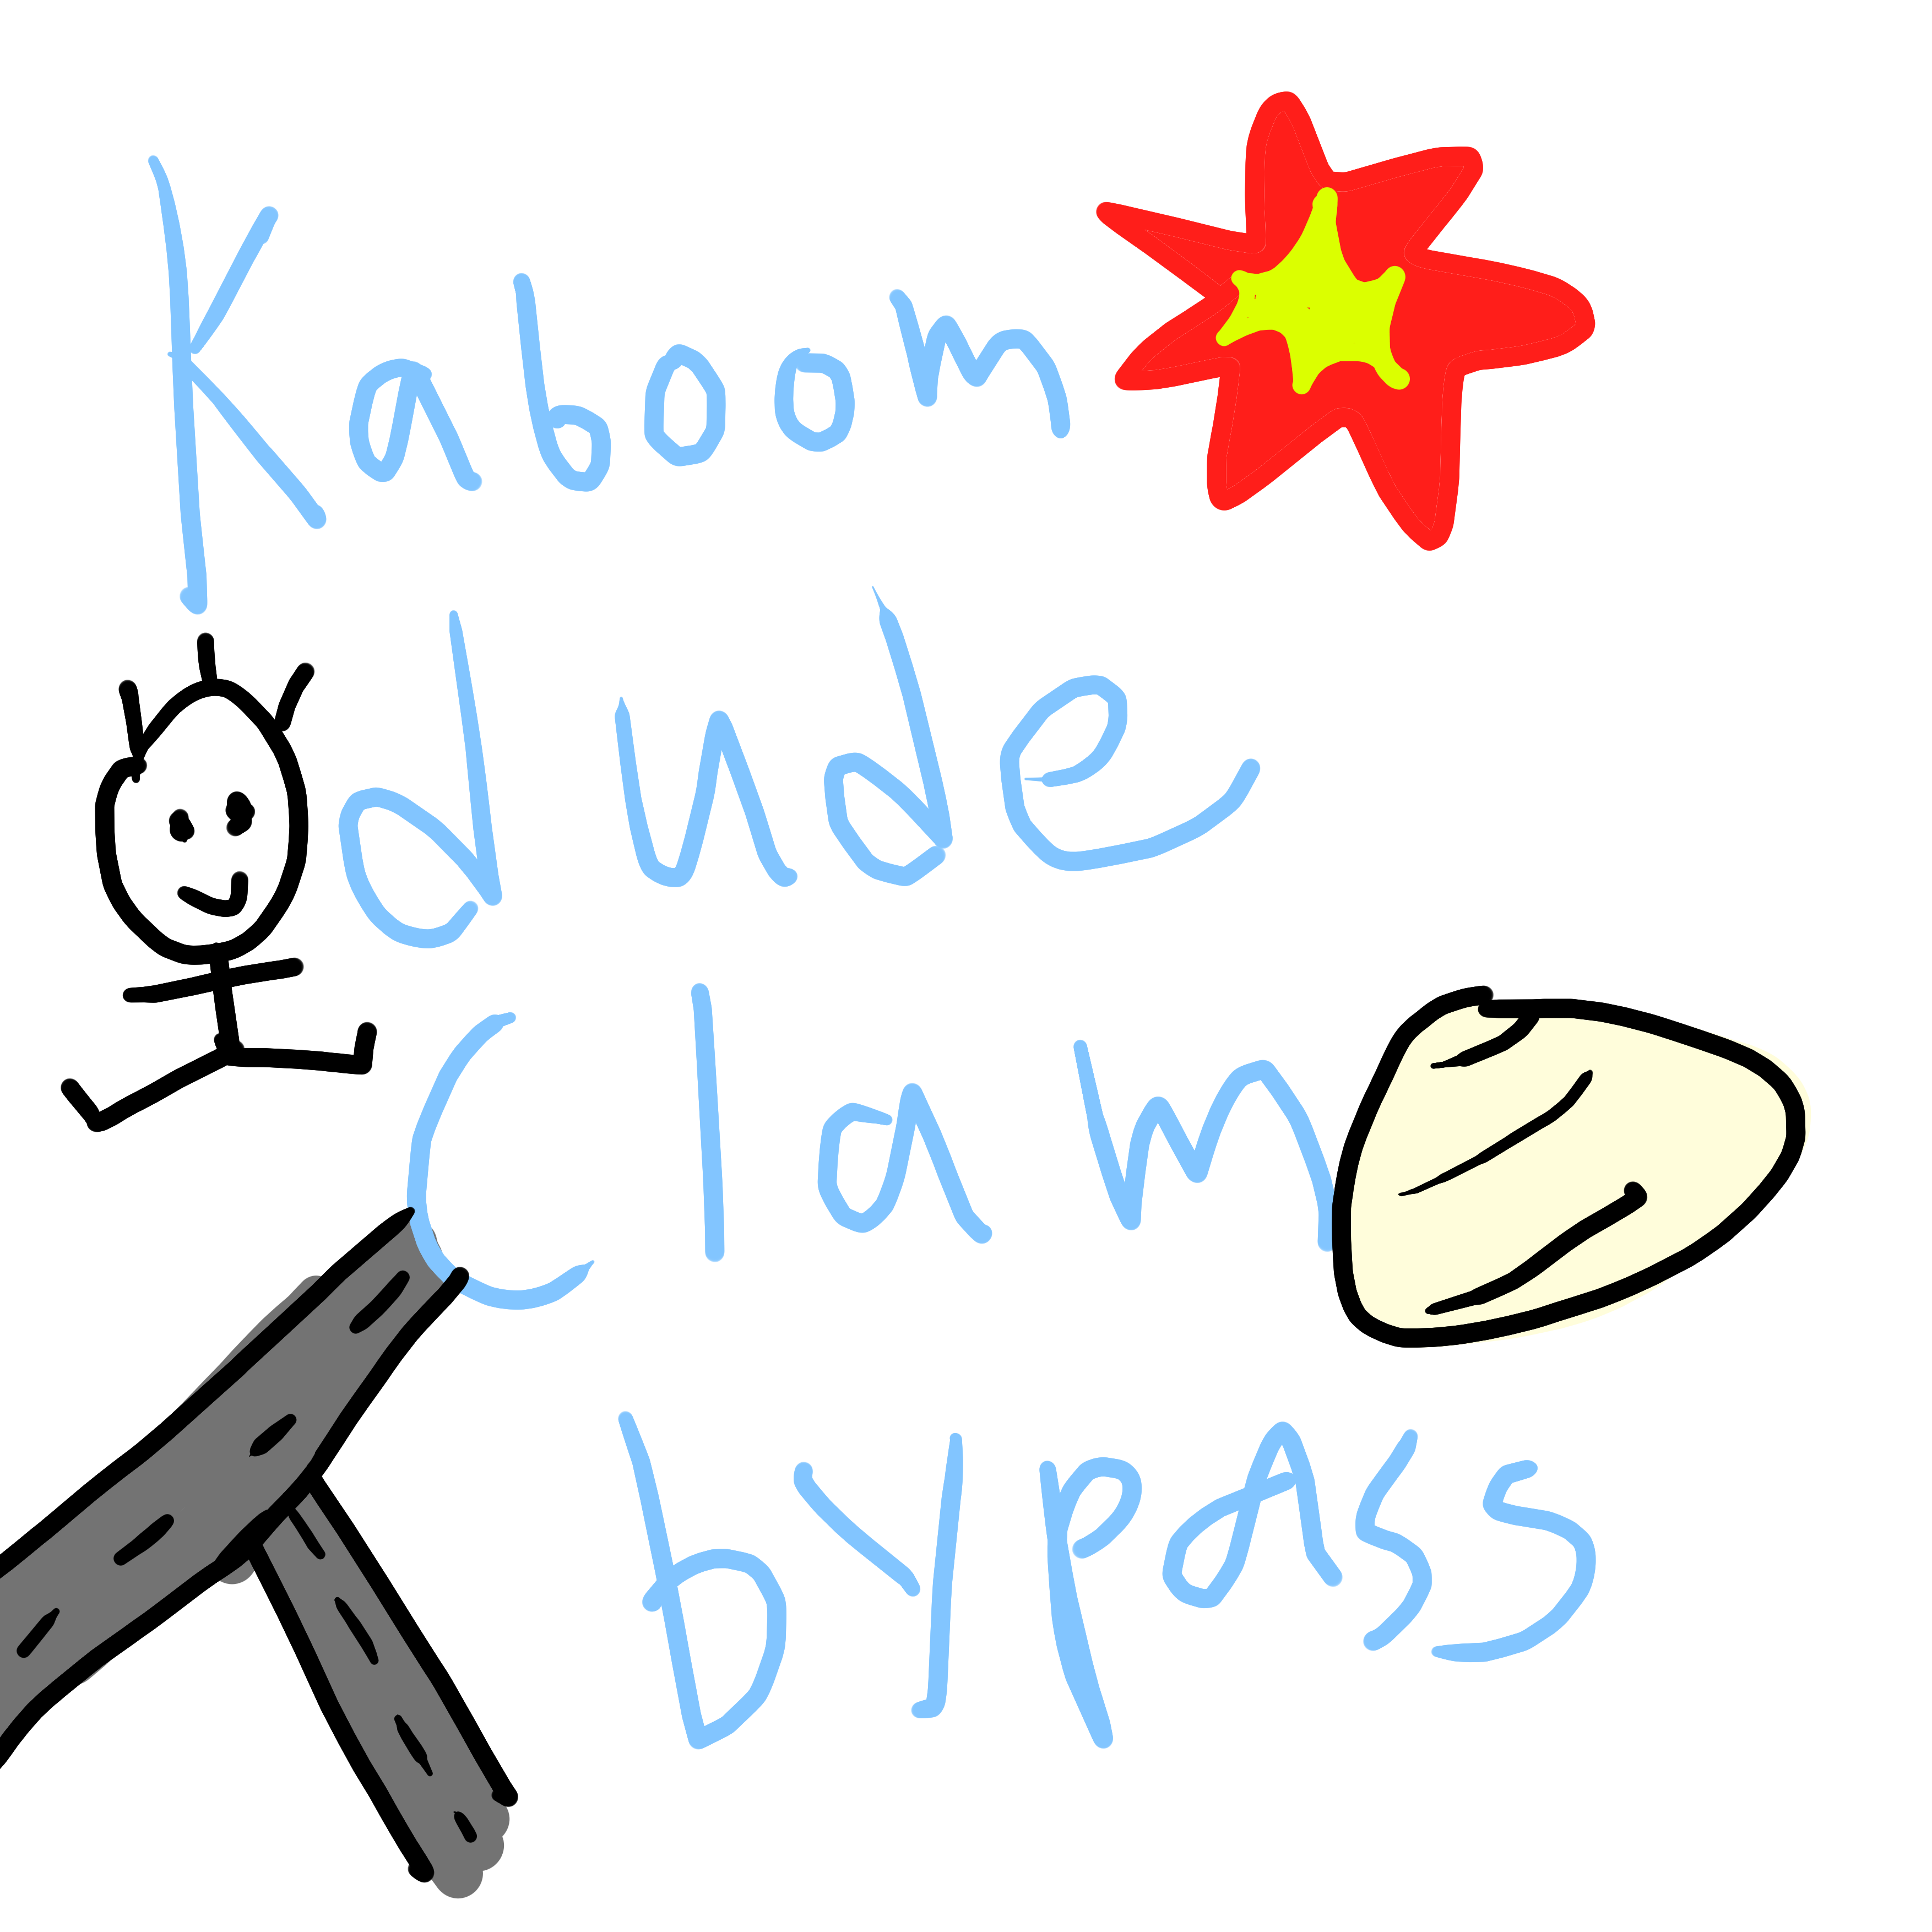 Kaboom dude clam bypass logo